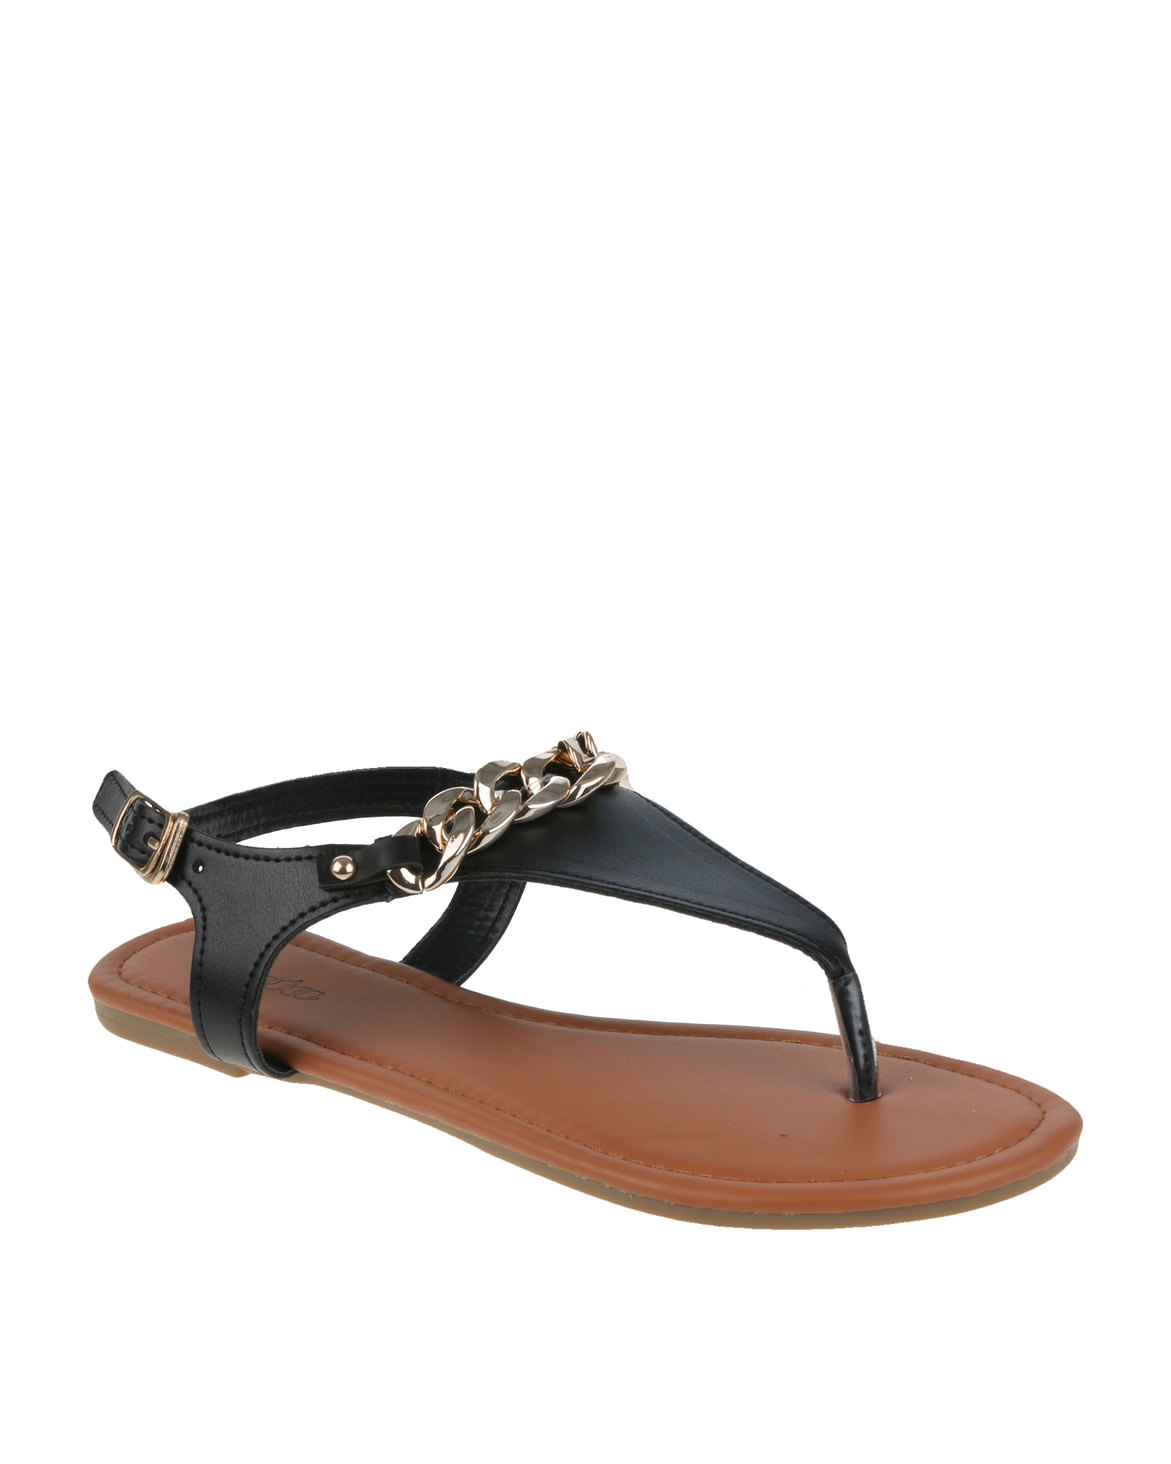 Bata Ladies Sandals With Gold Chain Detail Black | Zando